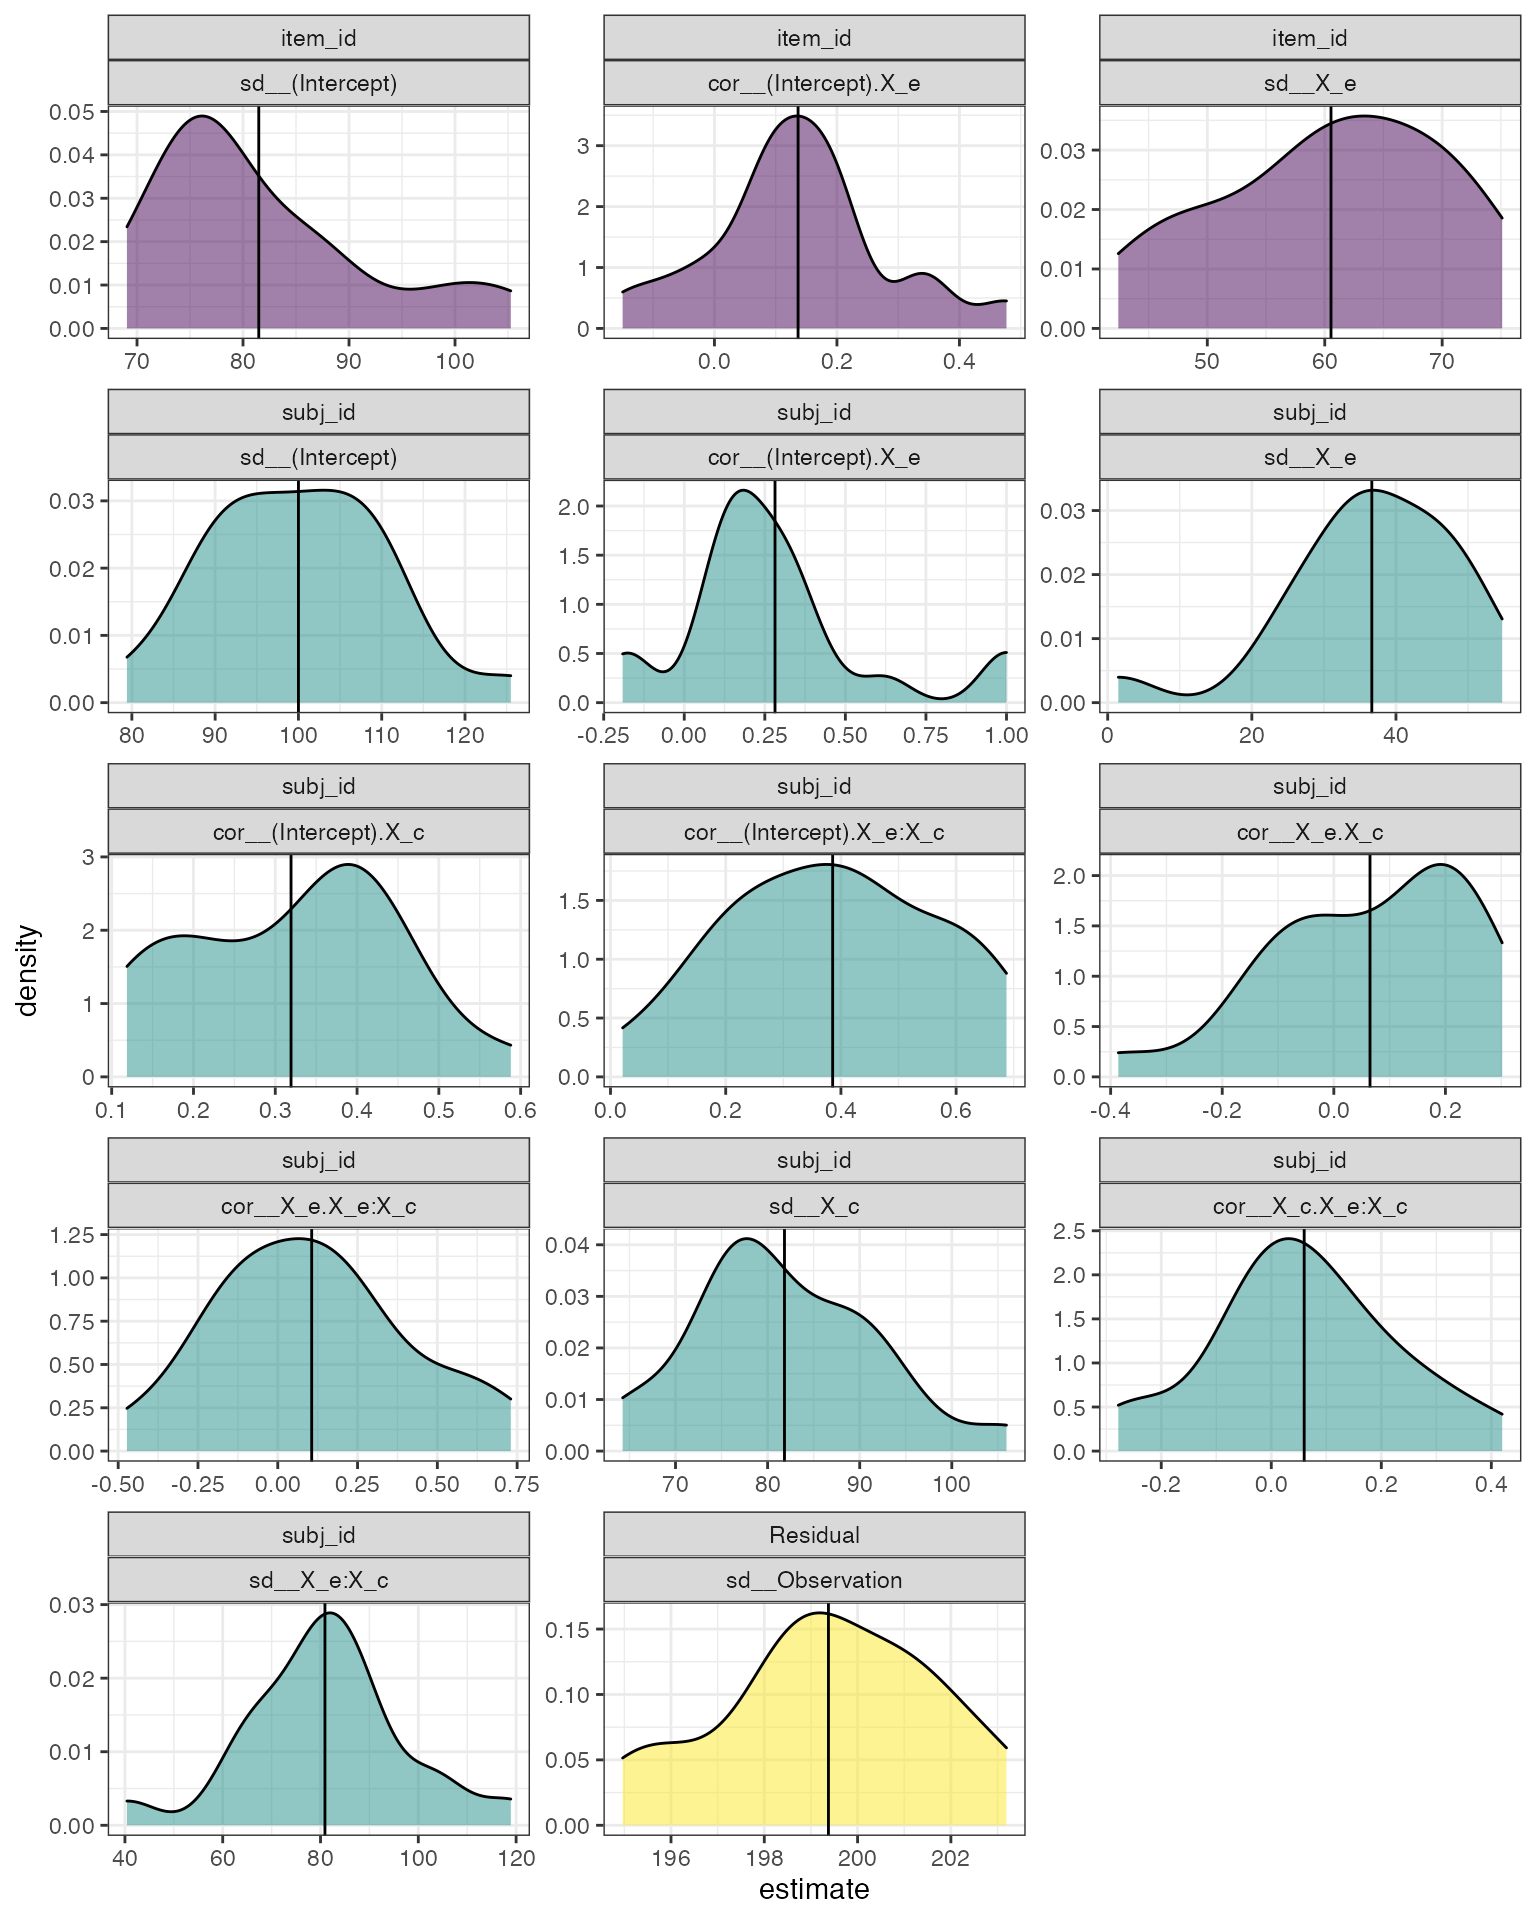 Distribution of random effects across simulations